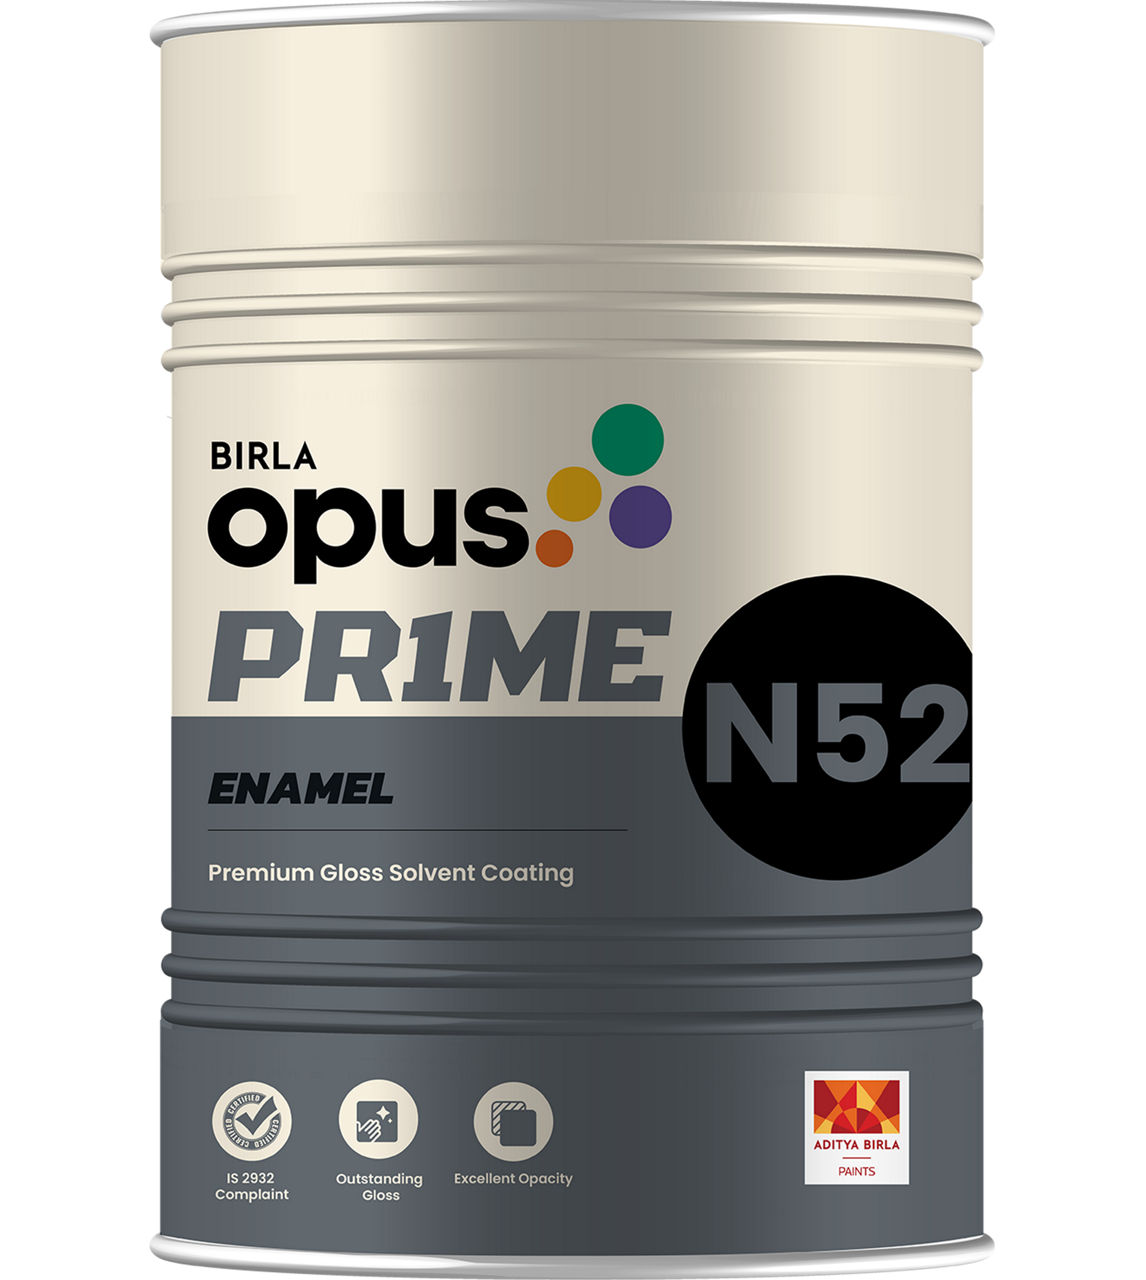 N52 Enamel Premium Gloss Solvent Coating